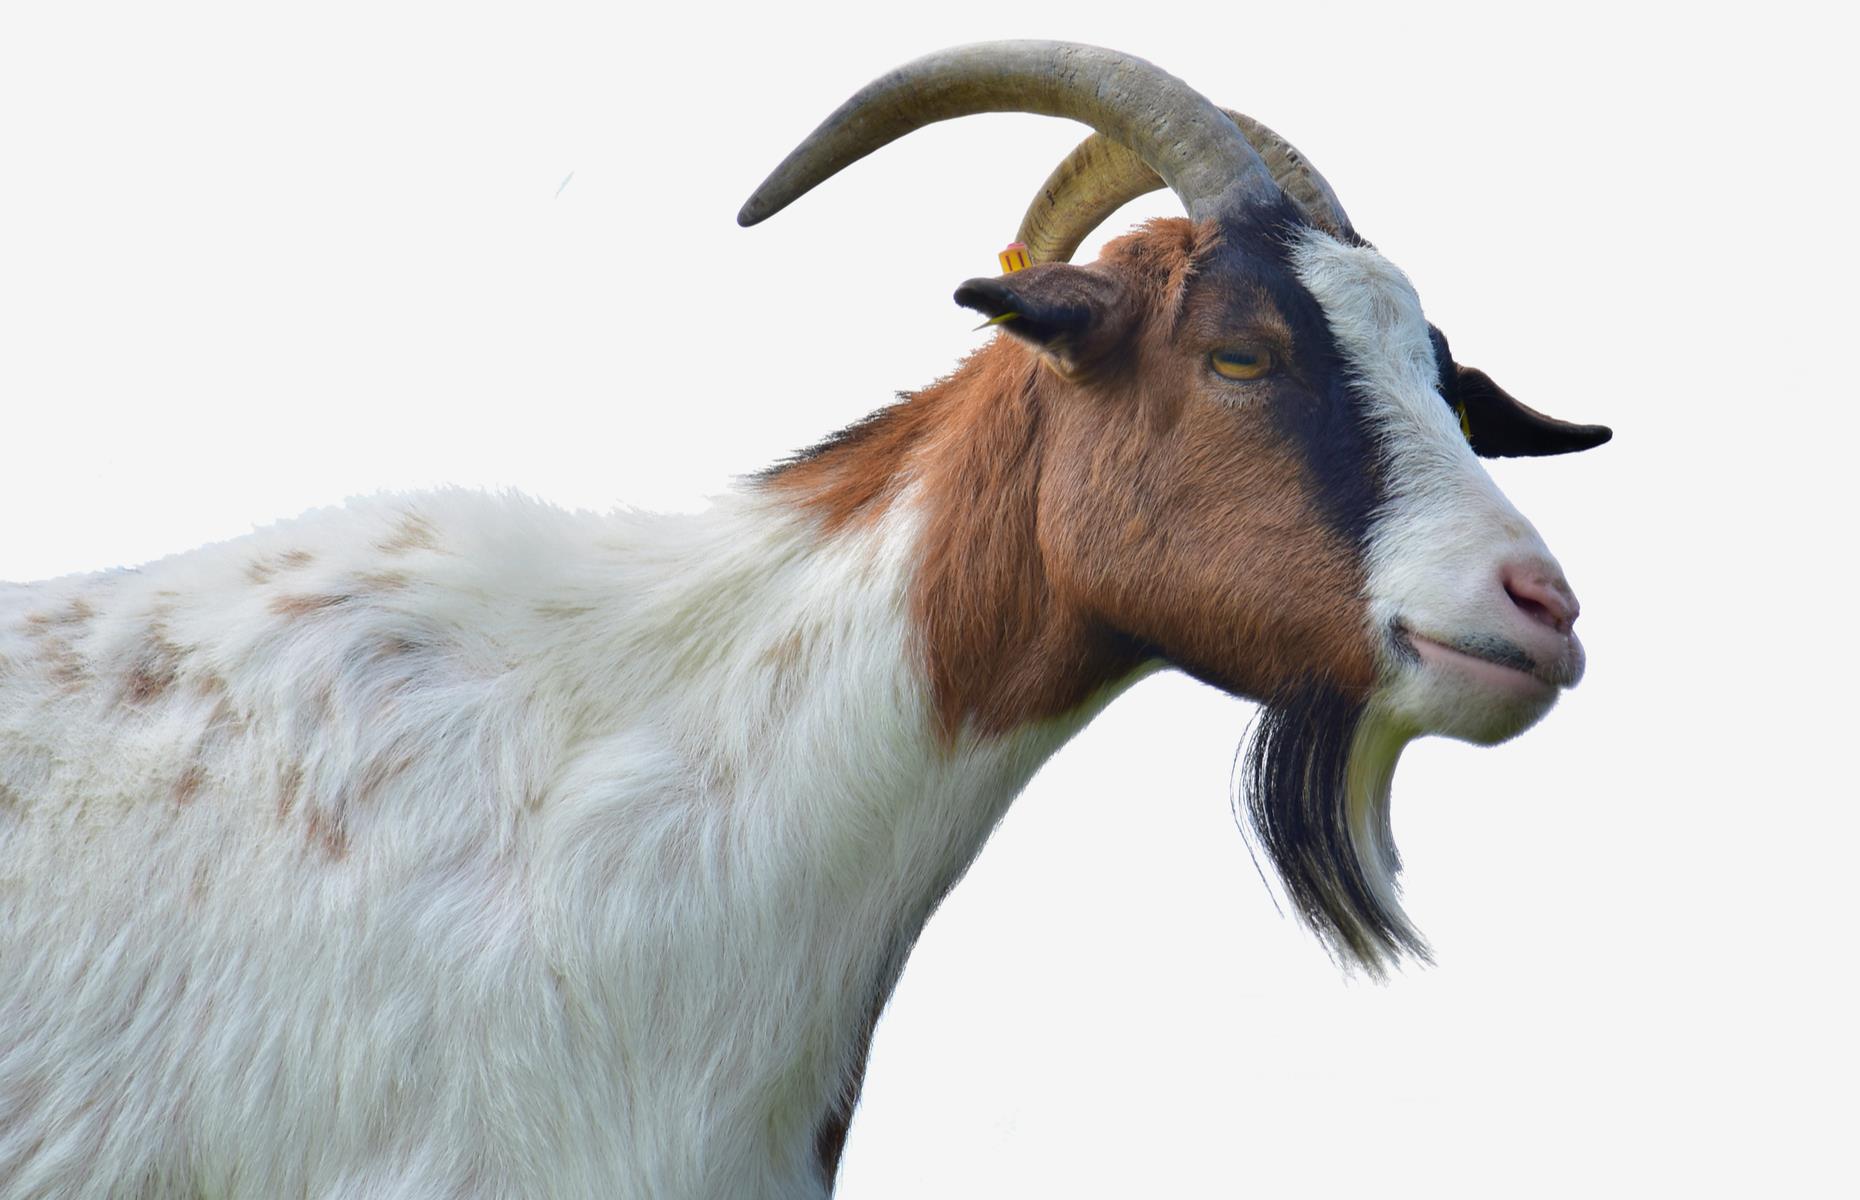 A goat farm in Alabama